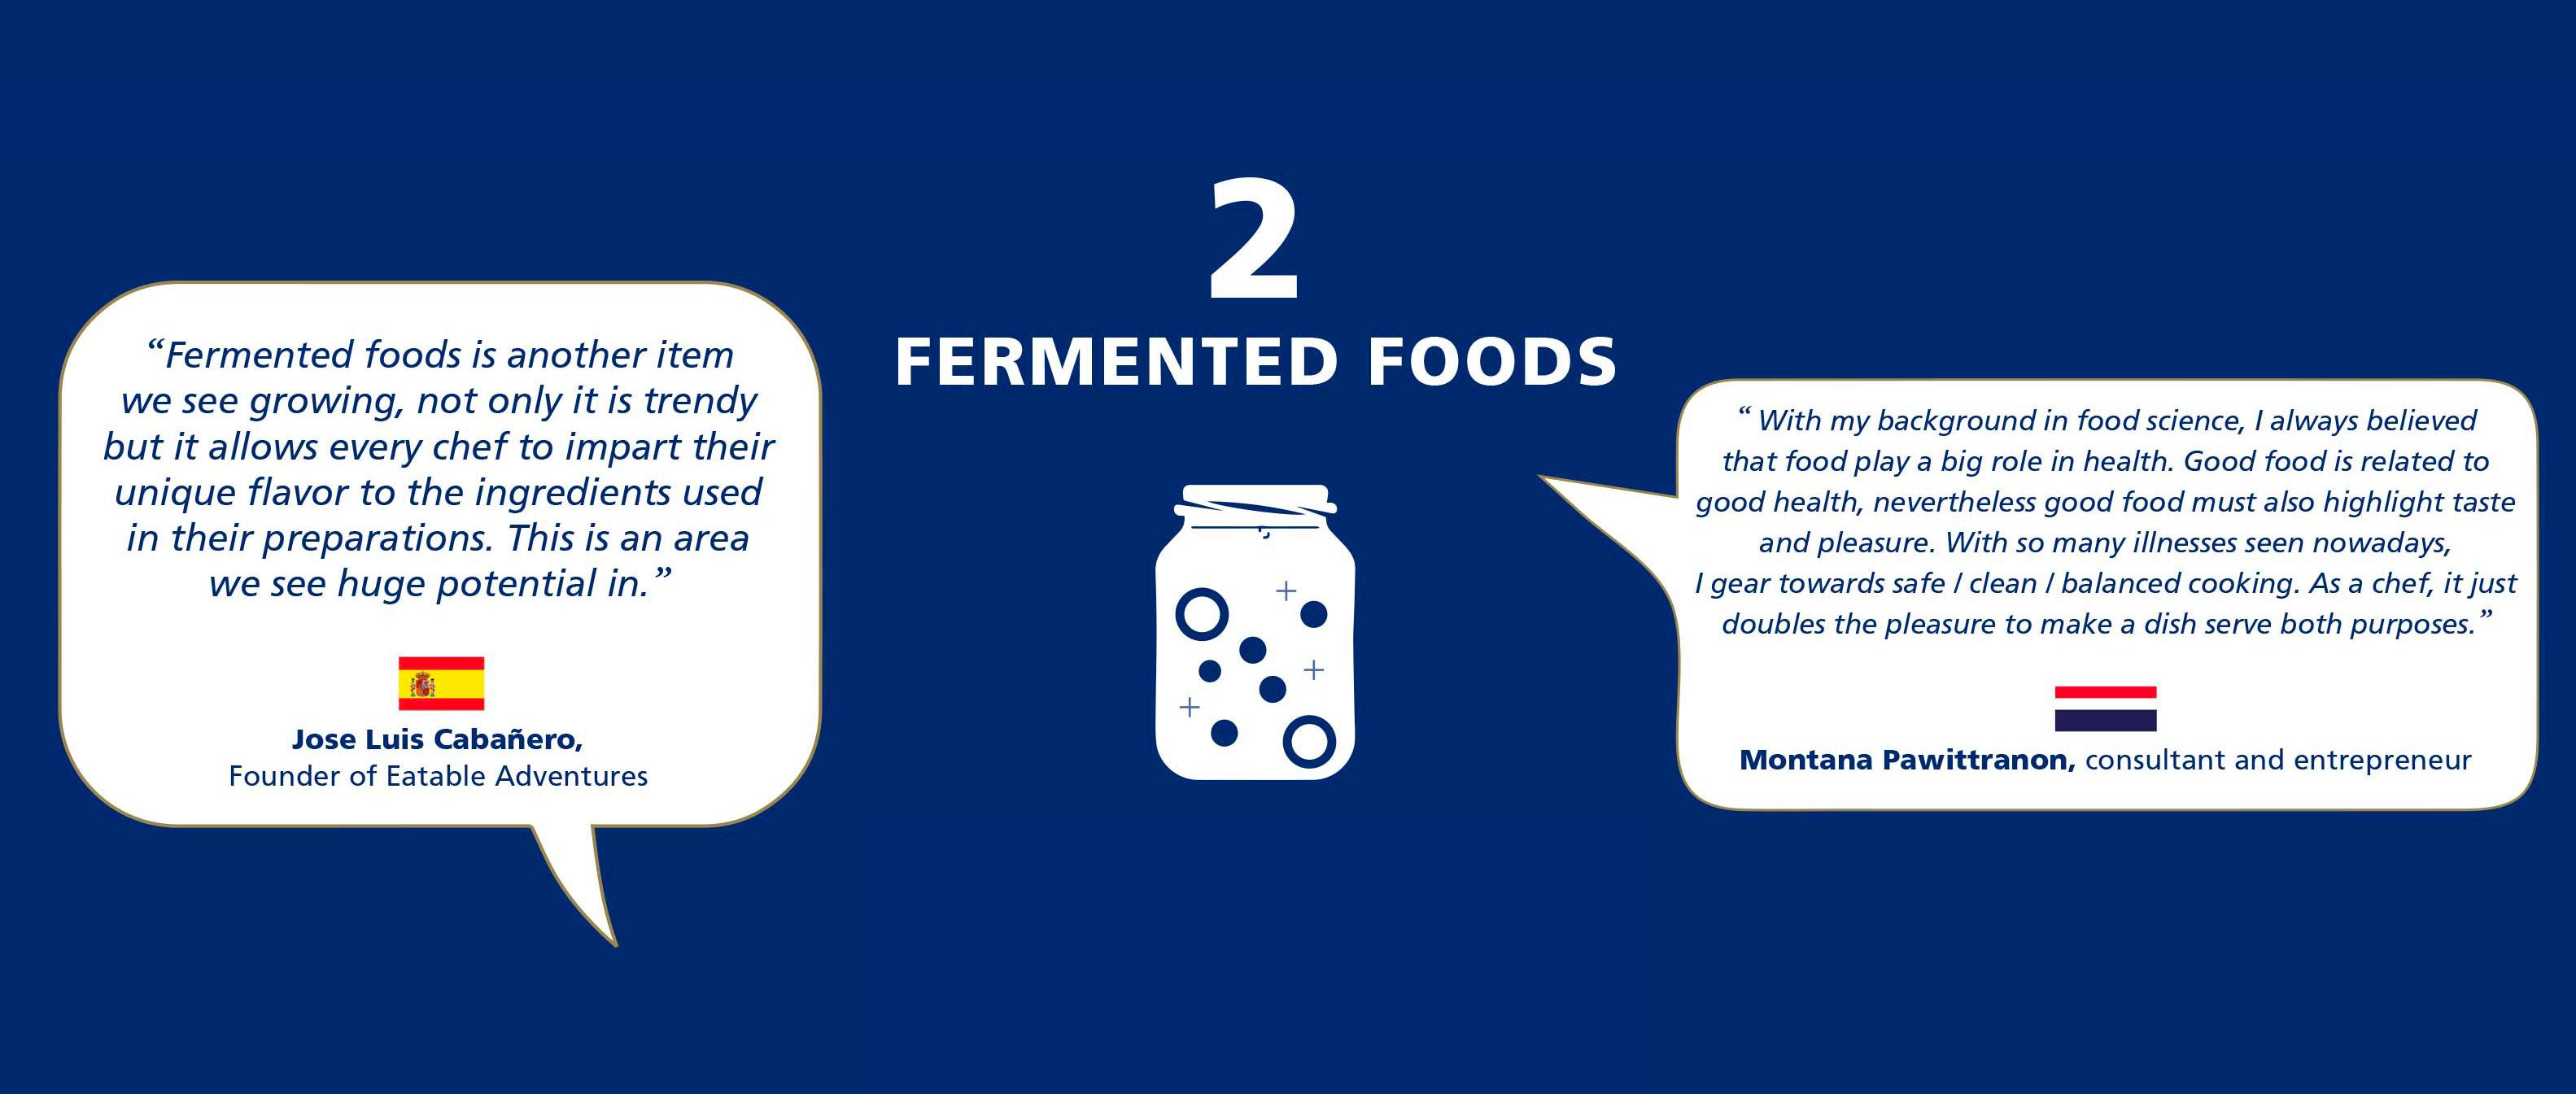 Fermented foods